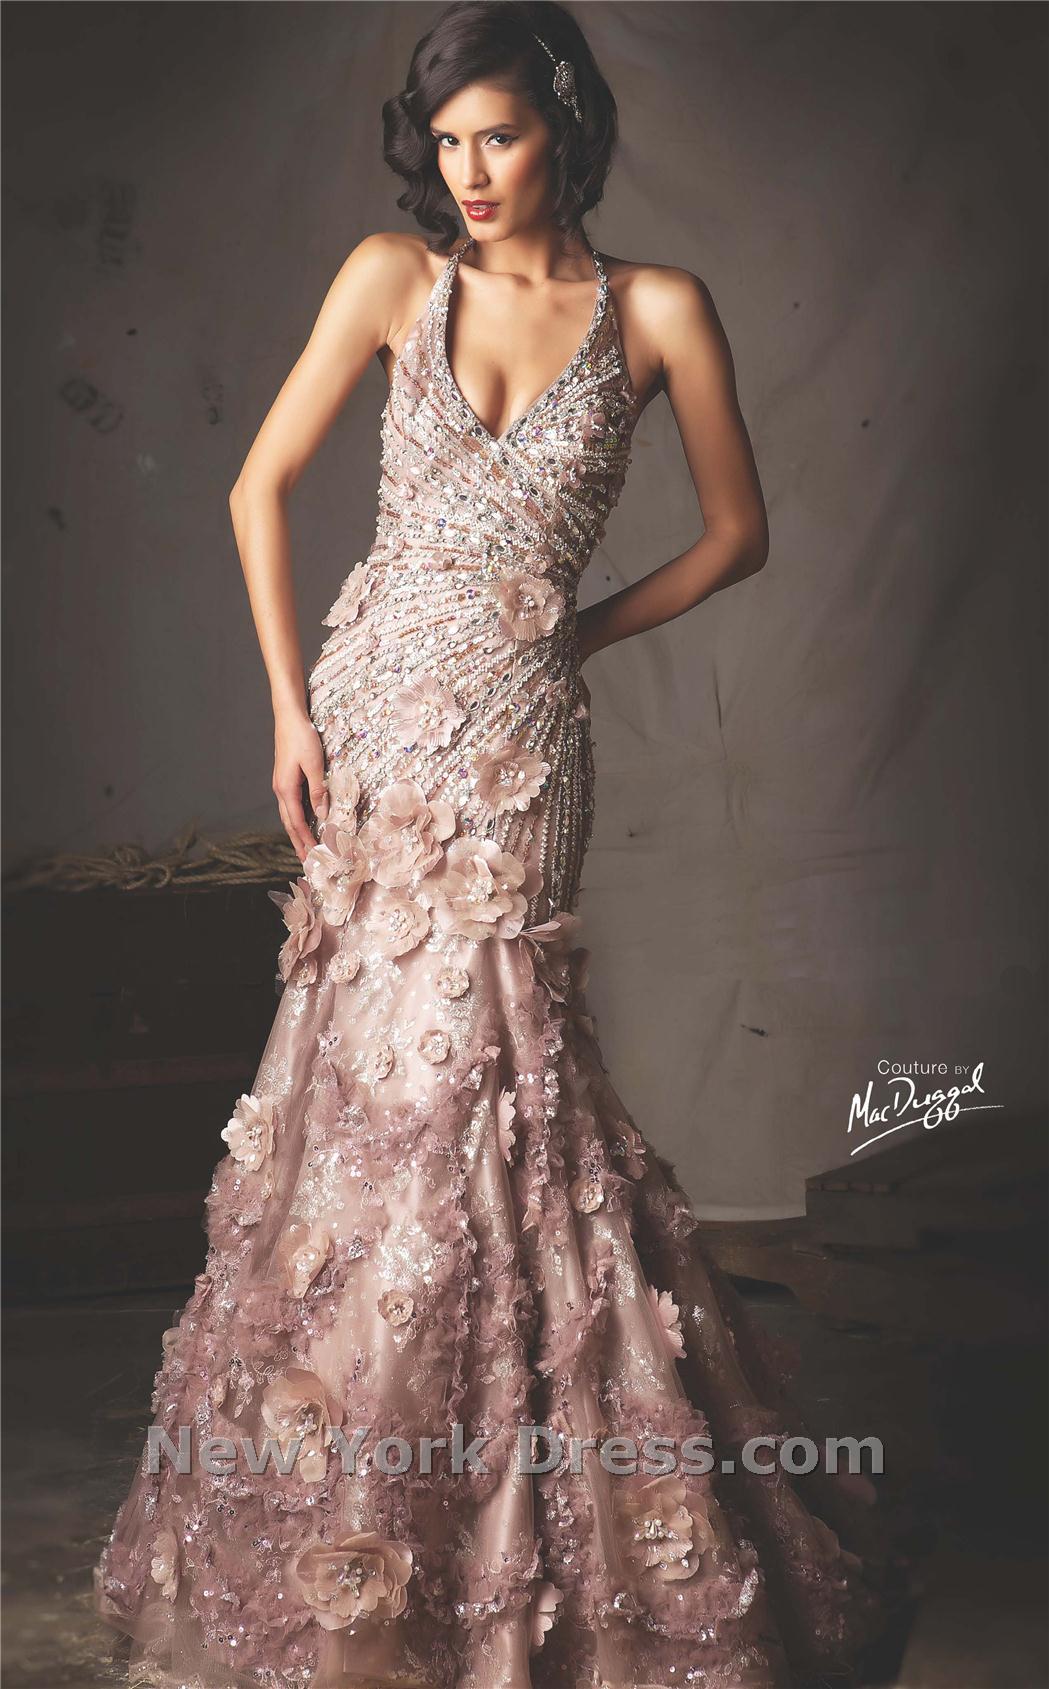 Gorgeous Dress by Mac Duggal